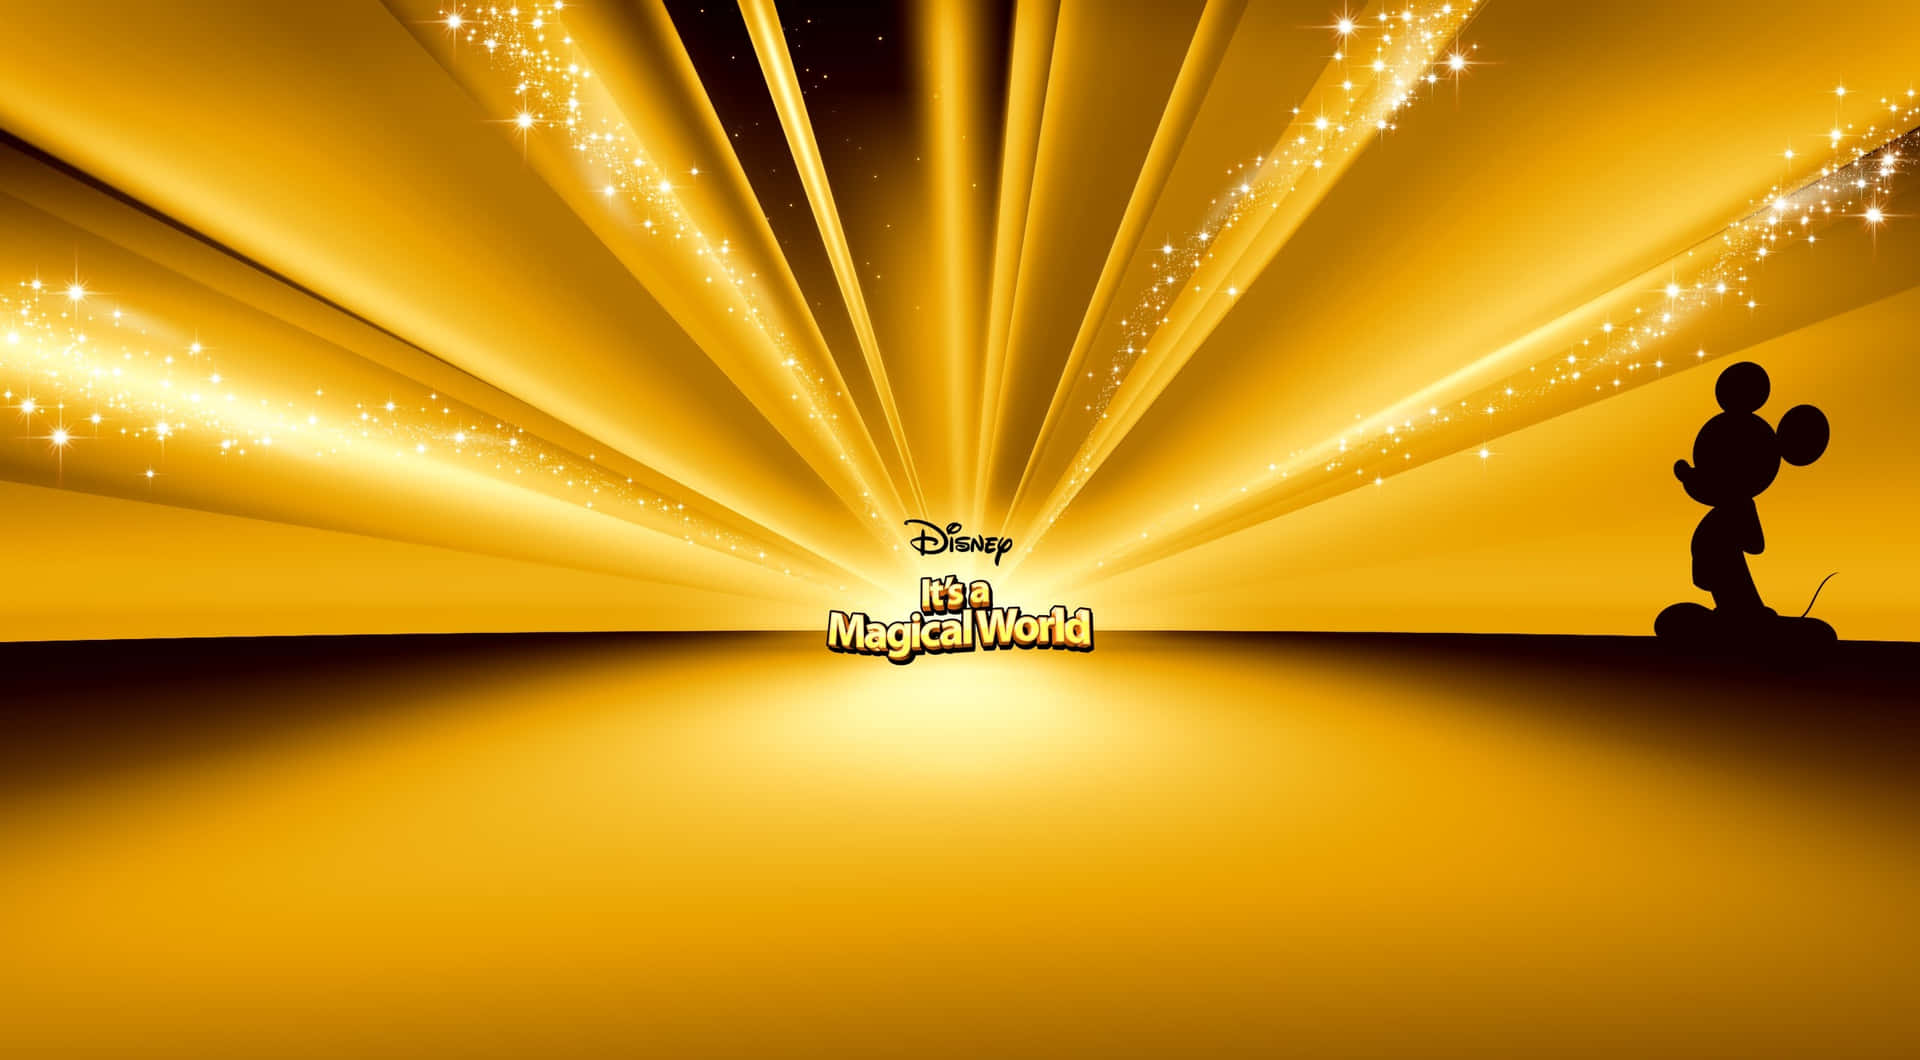 Gold Sparkly 1440p Disney Background